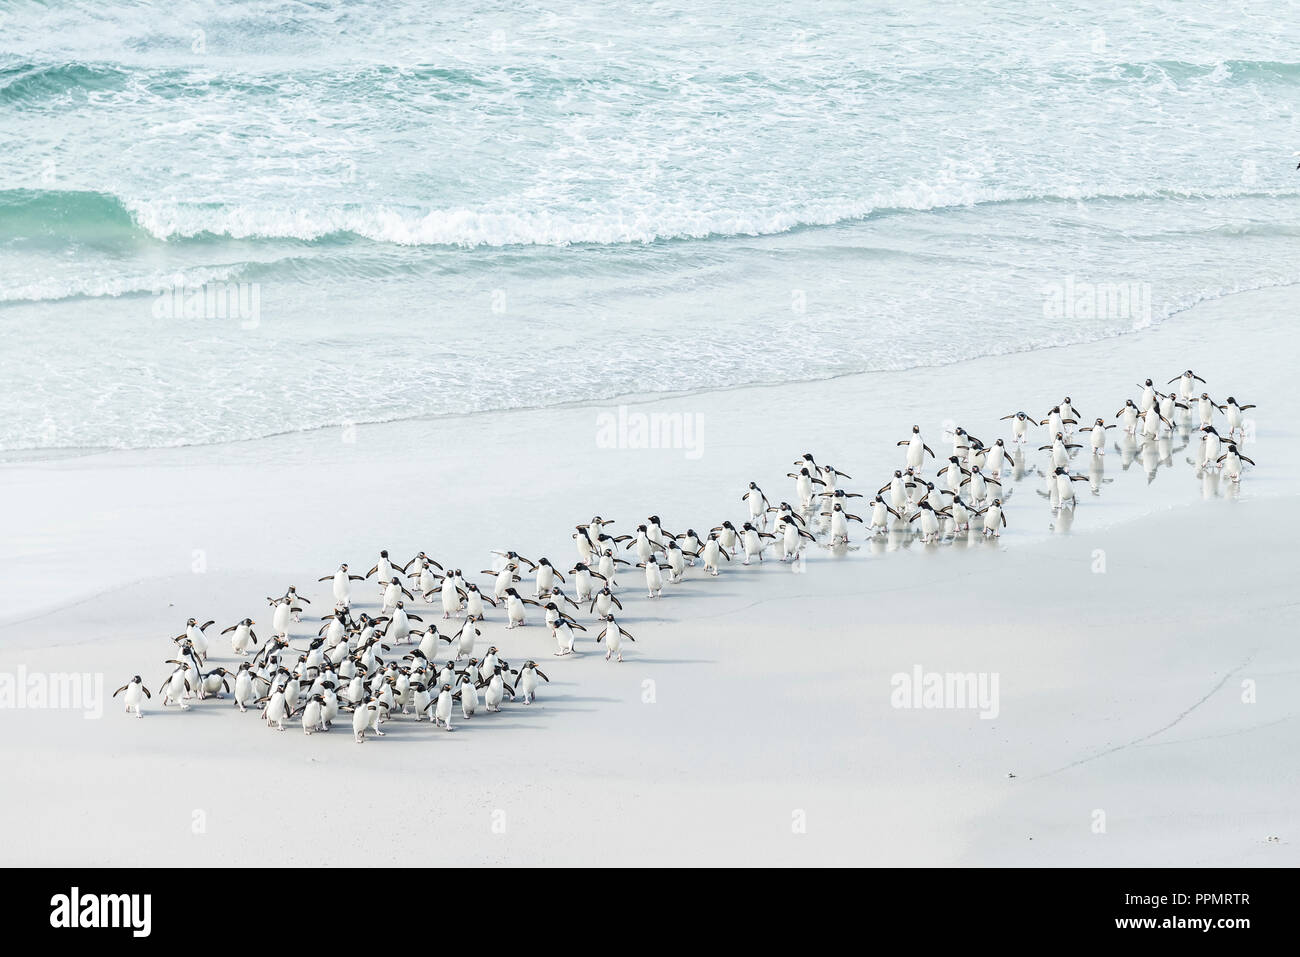 A seascape of rockhopper penguins. Stock Photo